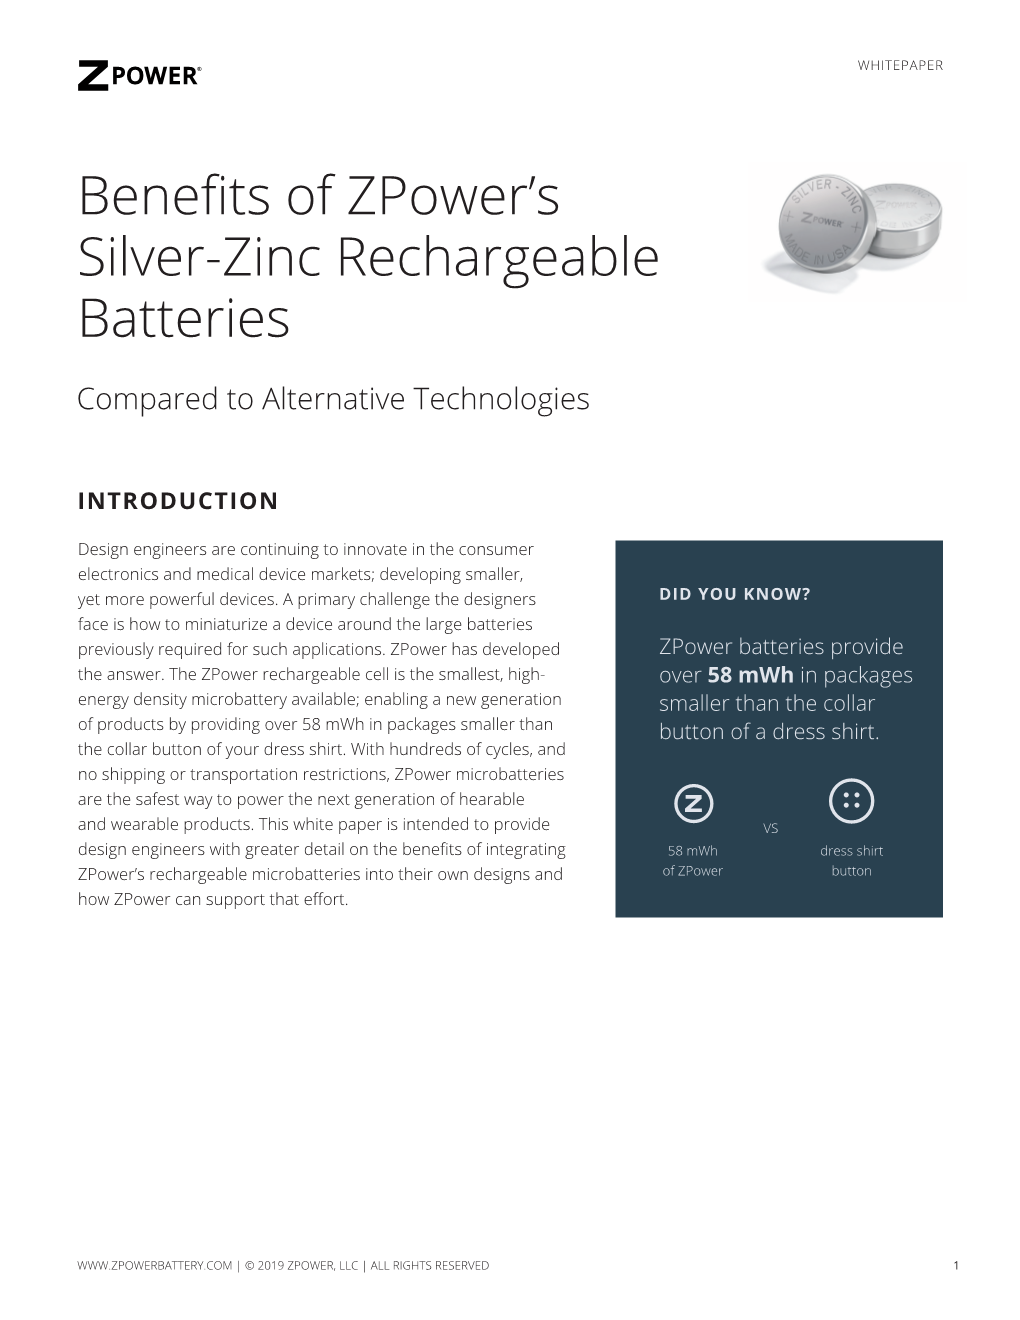 Benefits of Zpower's Silver-Zinc Rechargeable Batteries